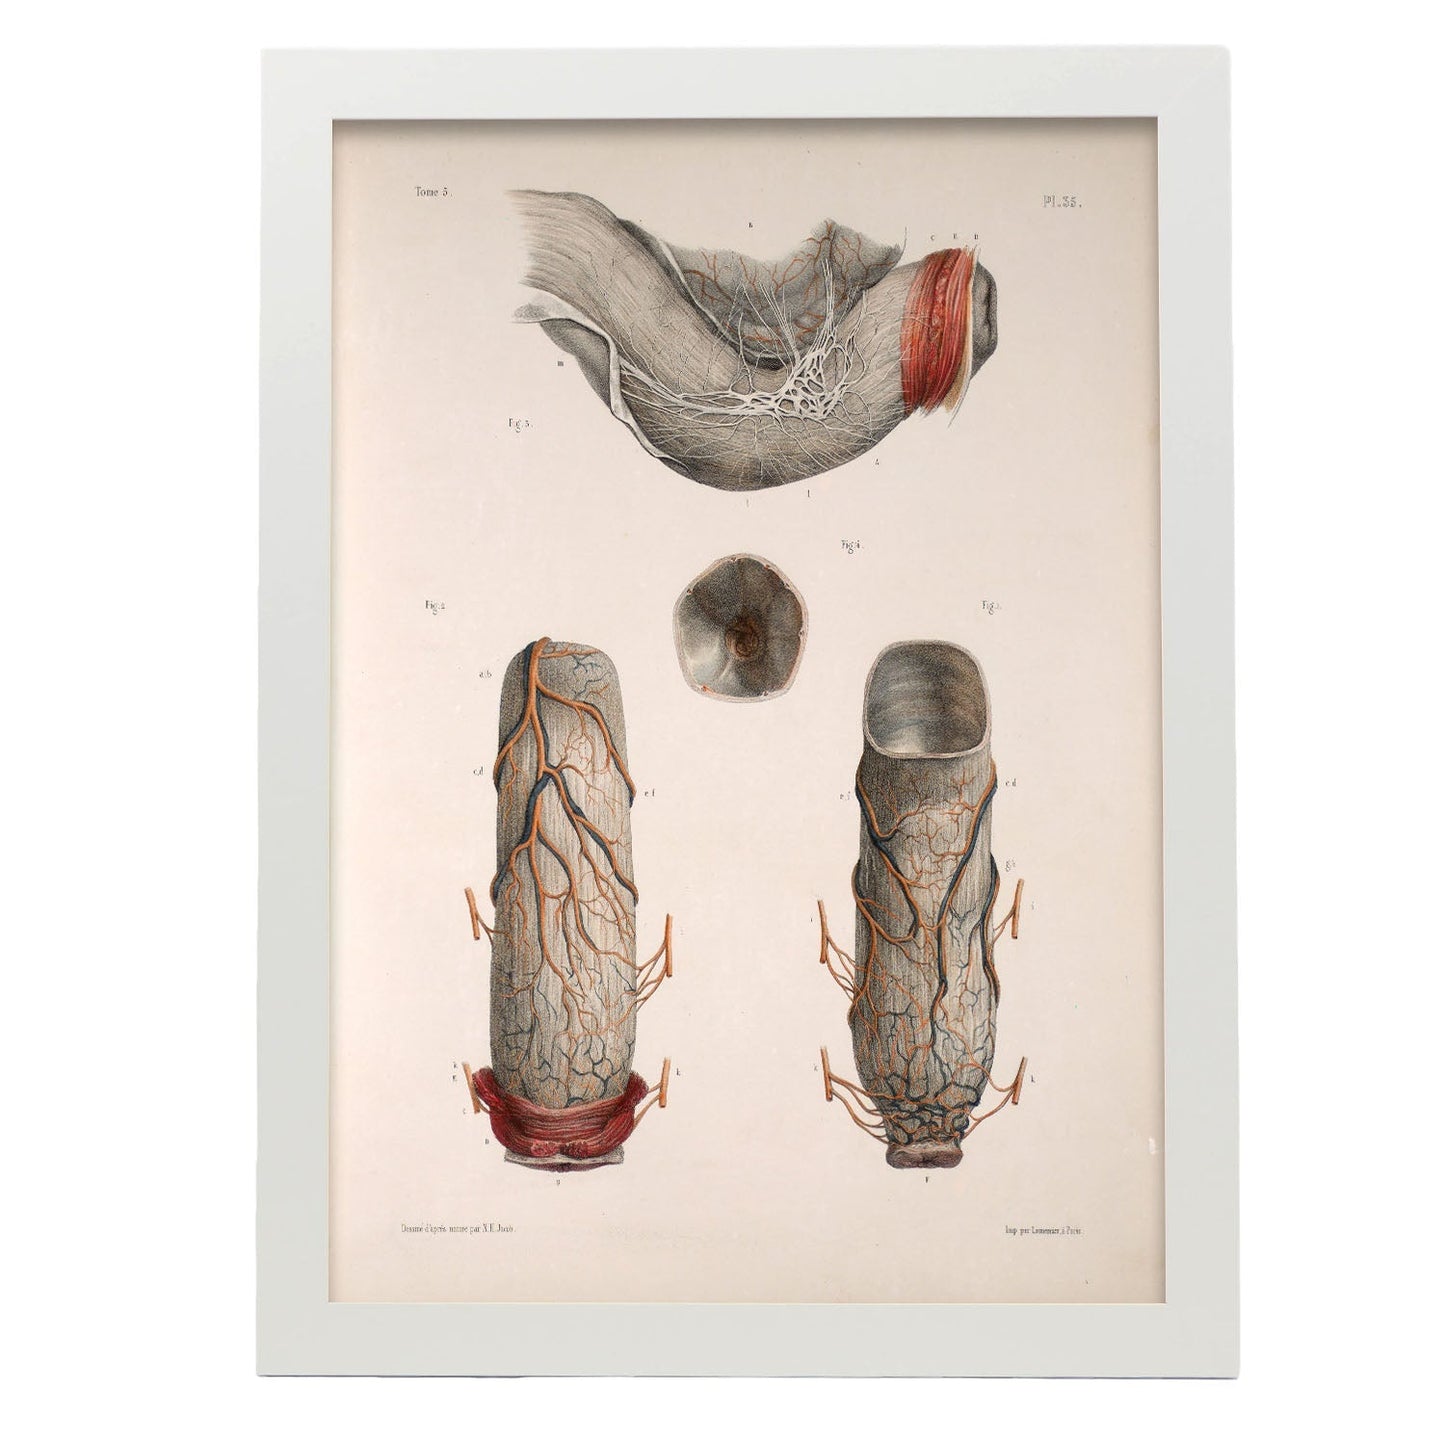 Large intestine, rectum and anus-Artwork-Nacnic-A3-Marco Blanco-Nacnic Estudio SL